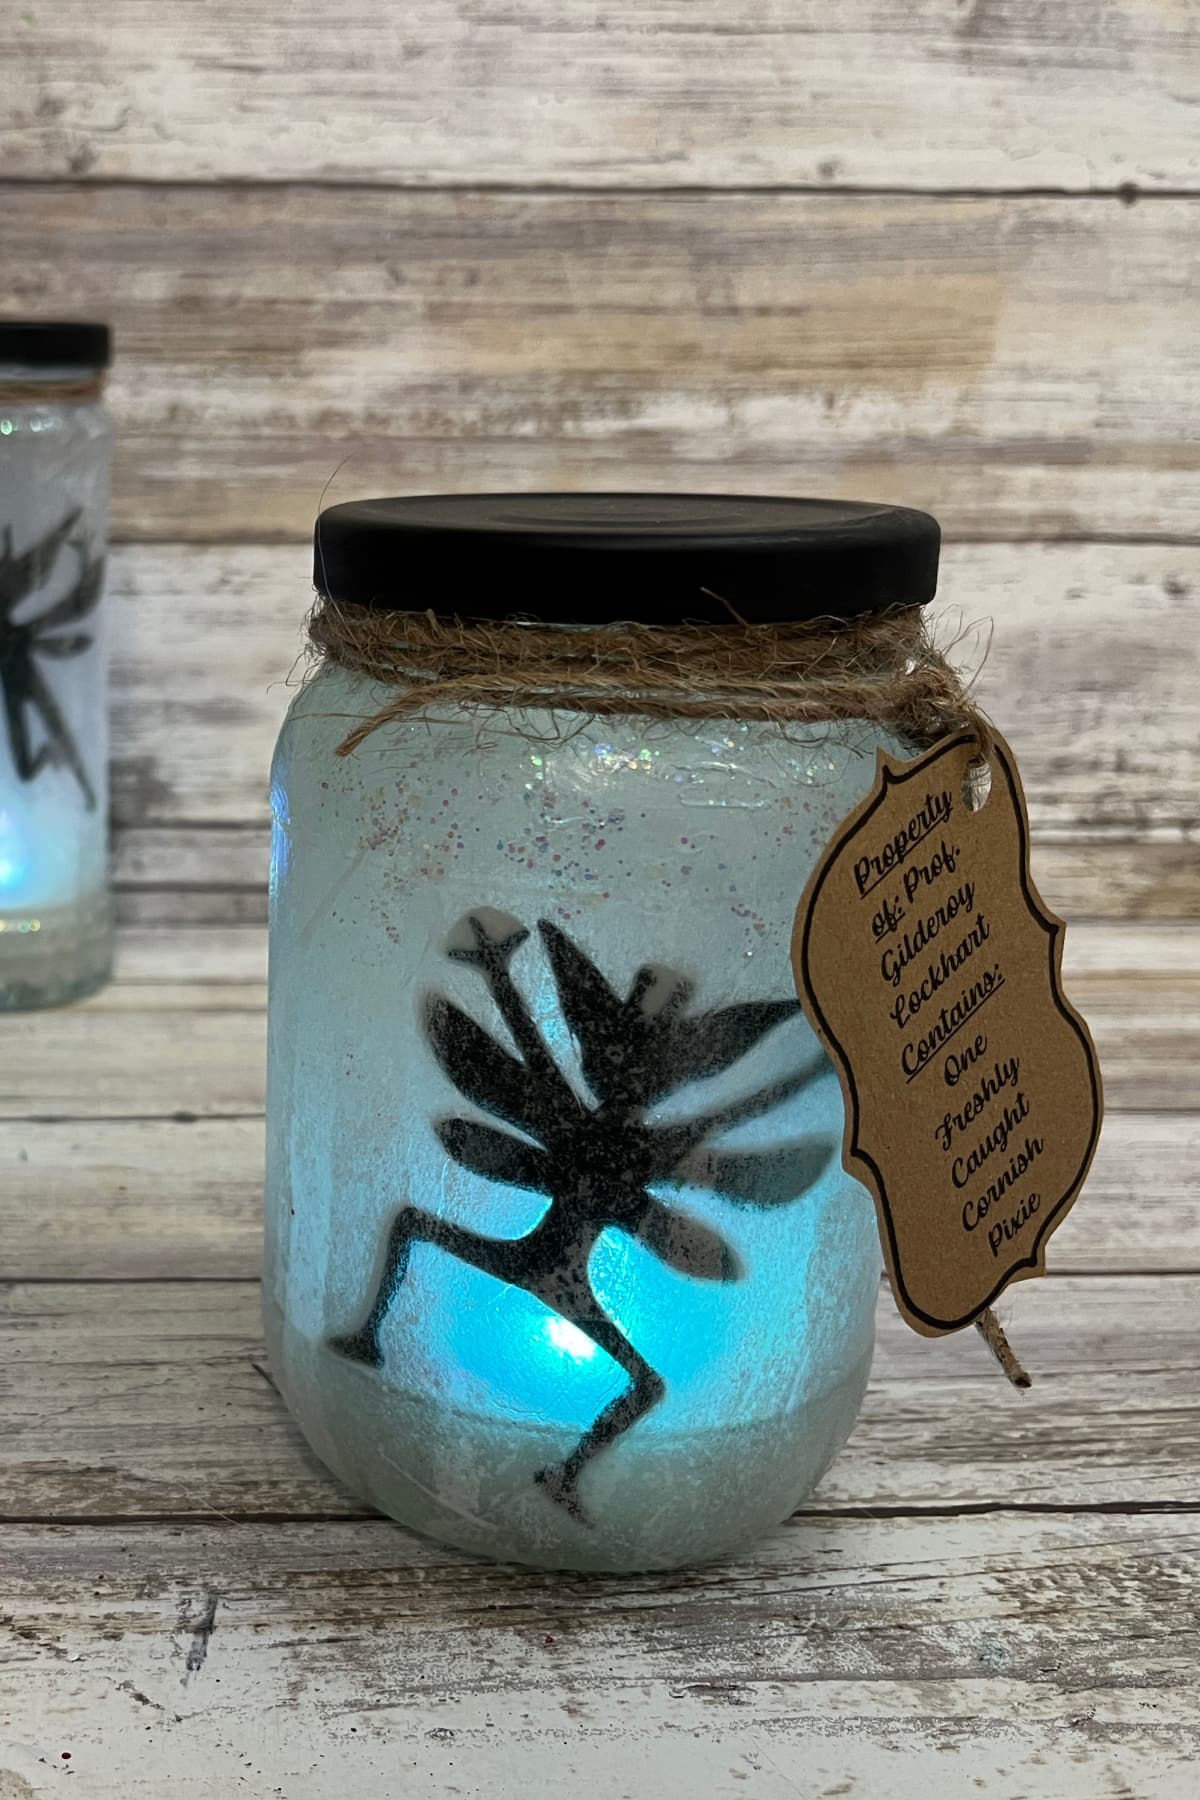 Cornish pixie jar with blue light